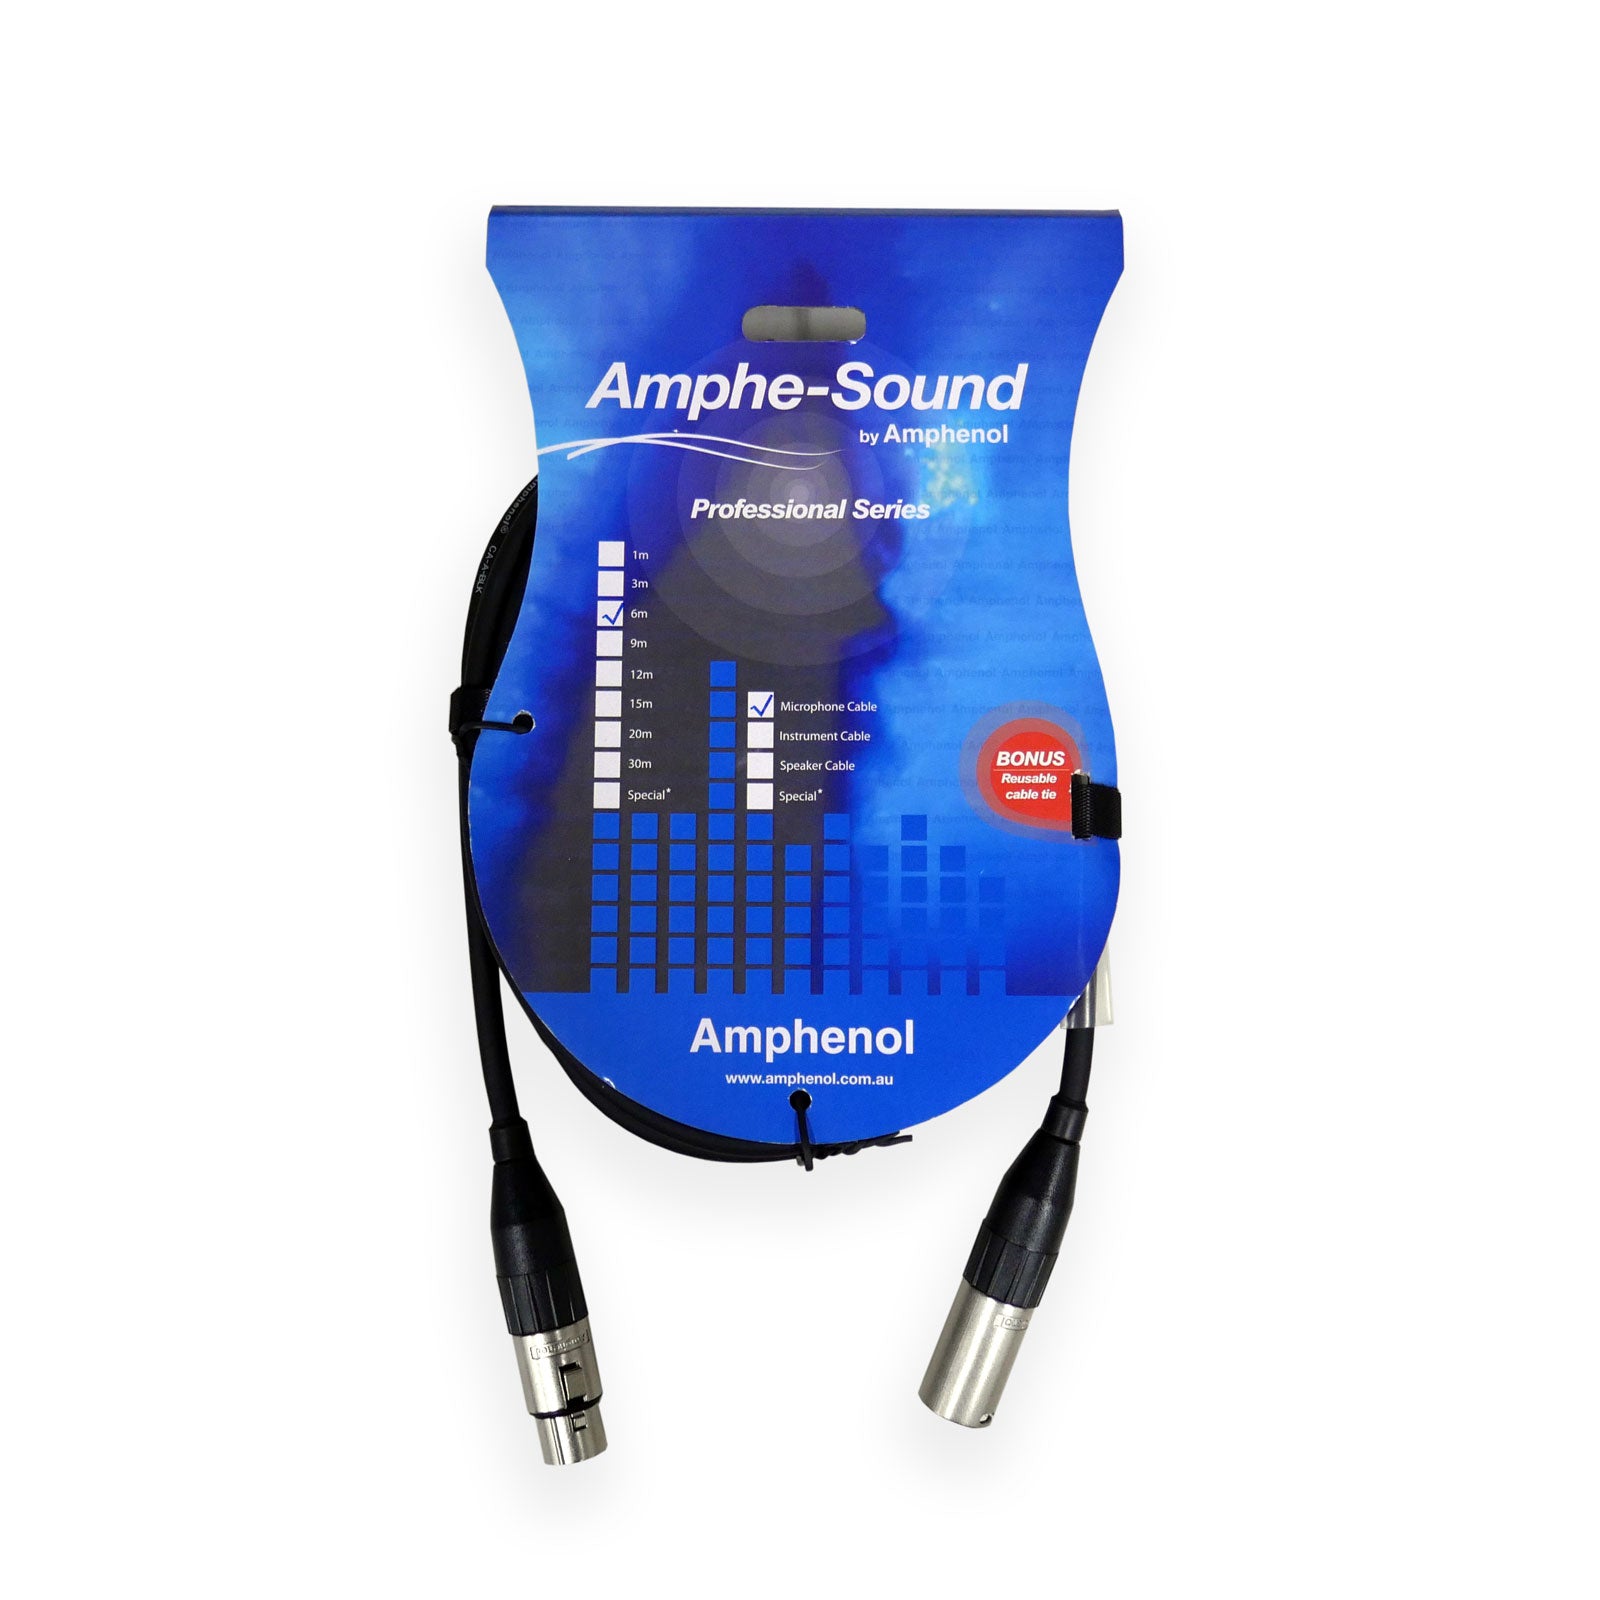 Amphenol Pro Series XLR cables